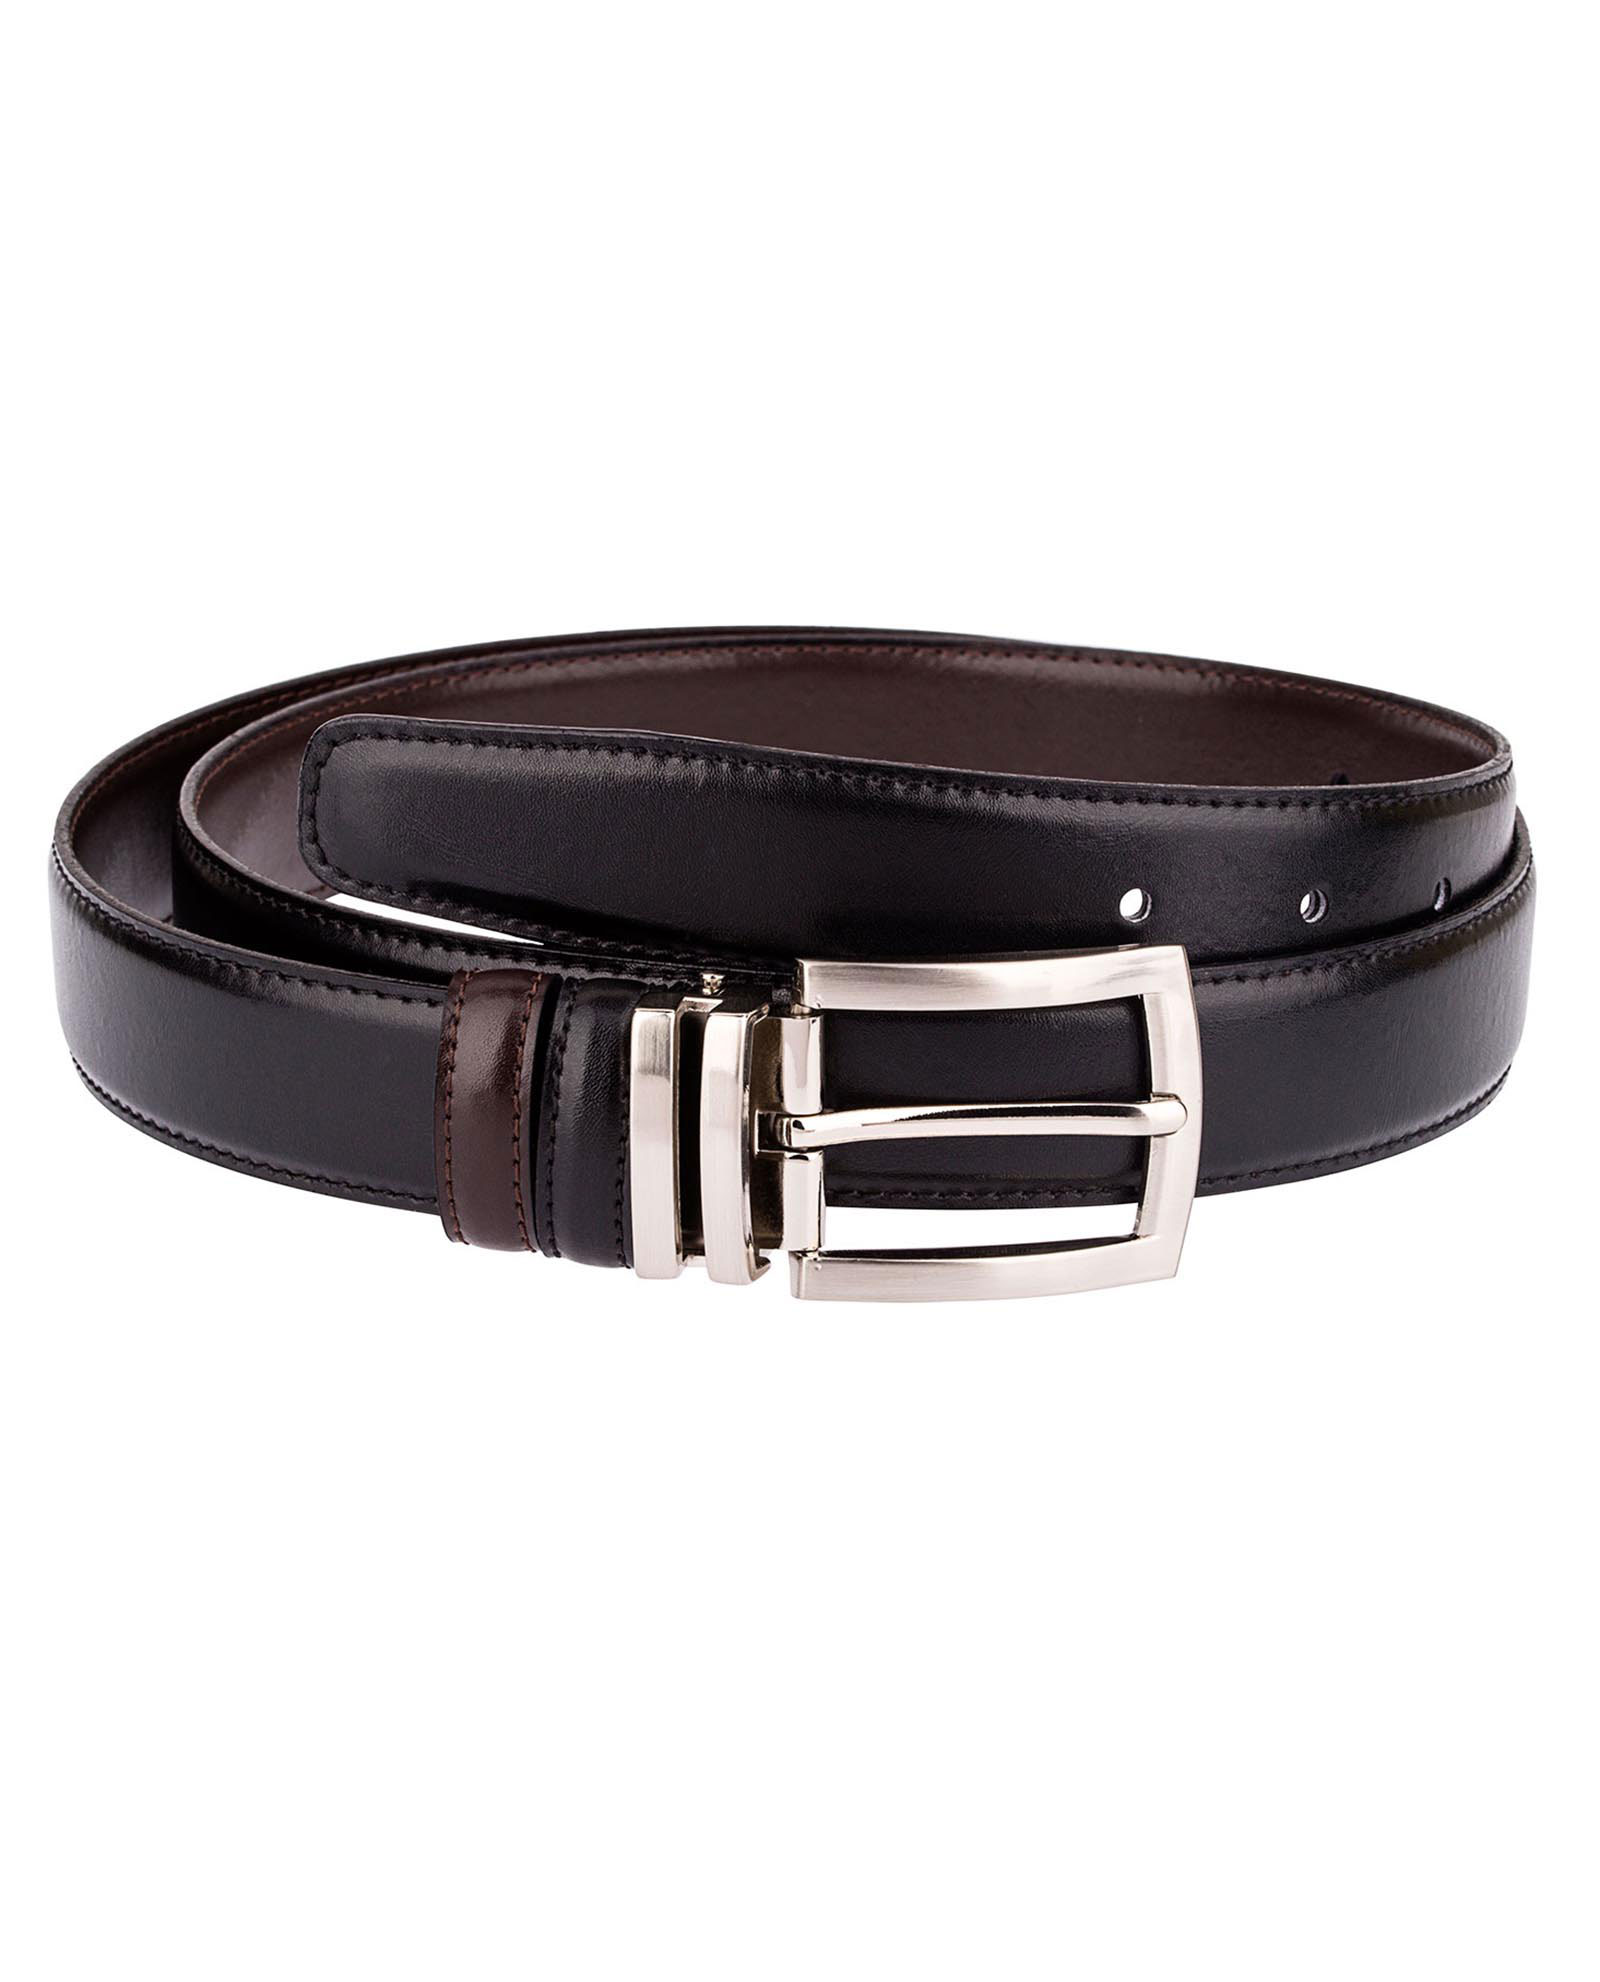 Buy Black Brown Mens Belt - Reversible Leather - Free Shipping